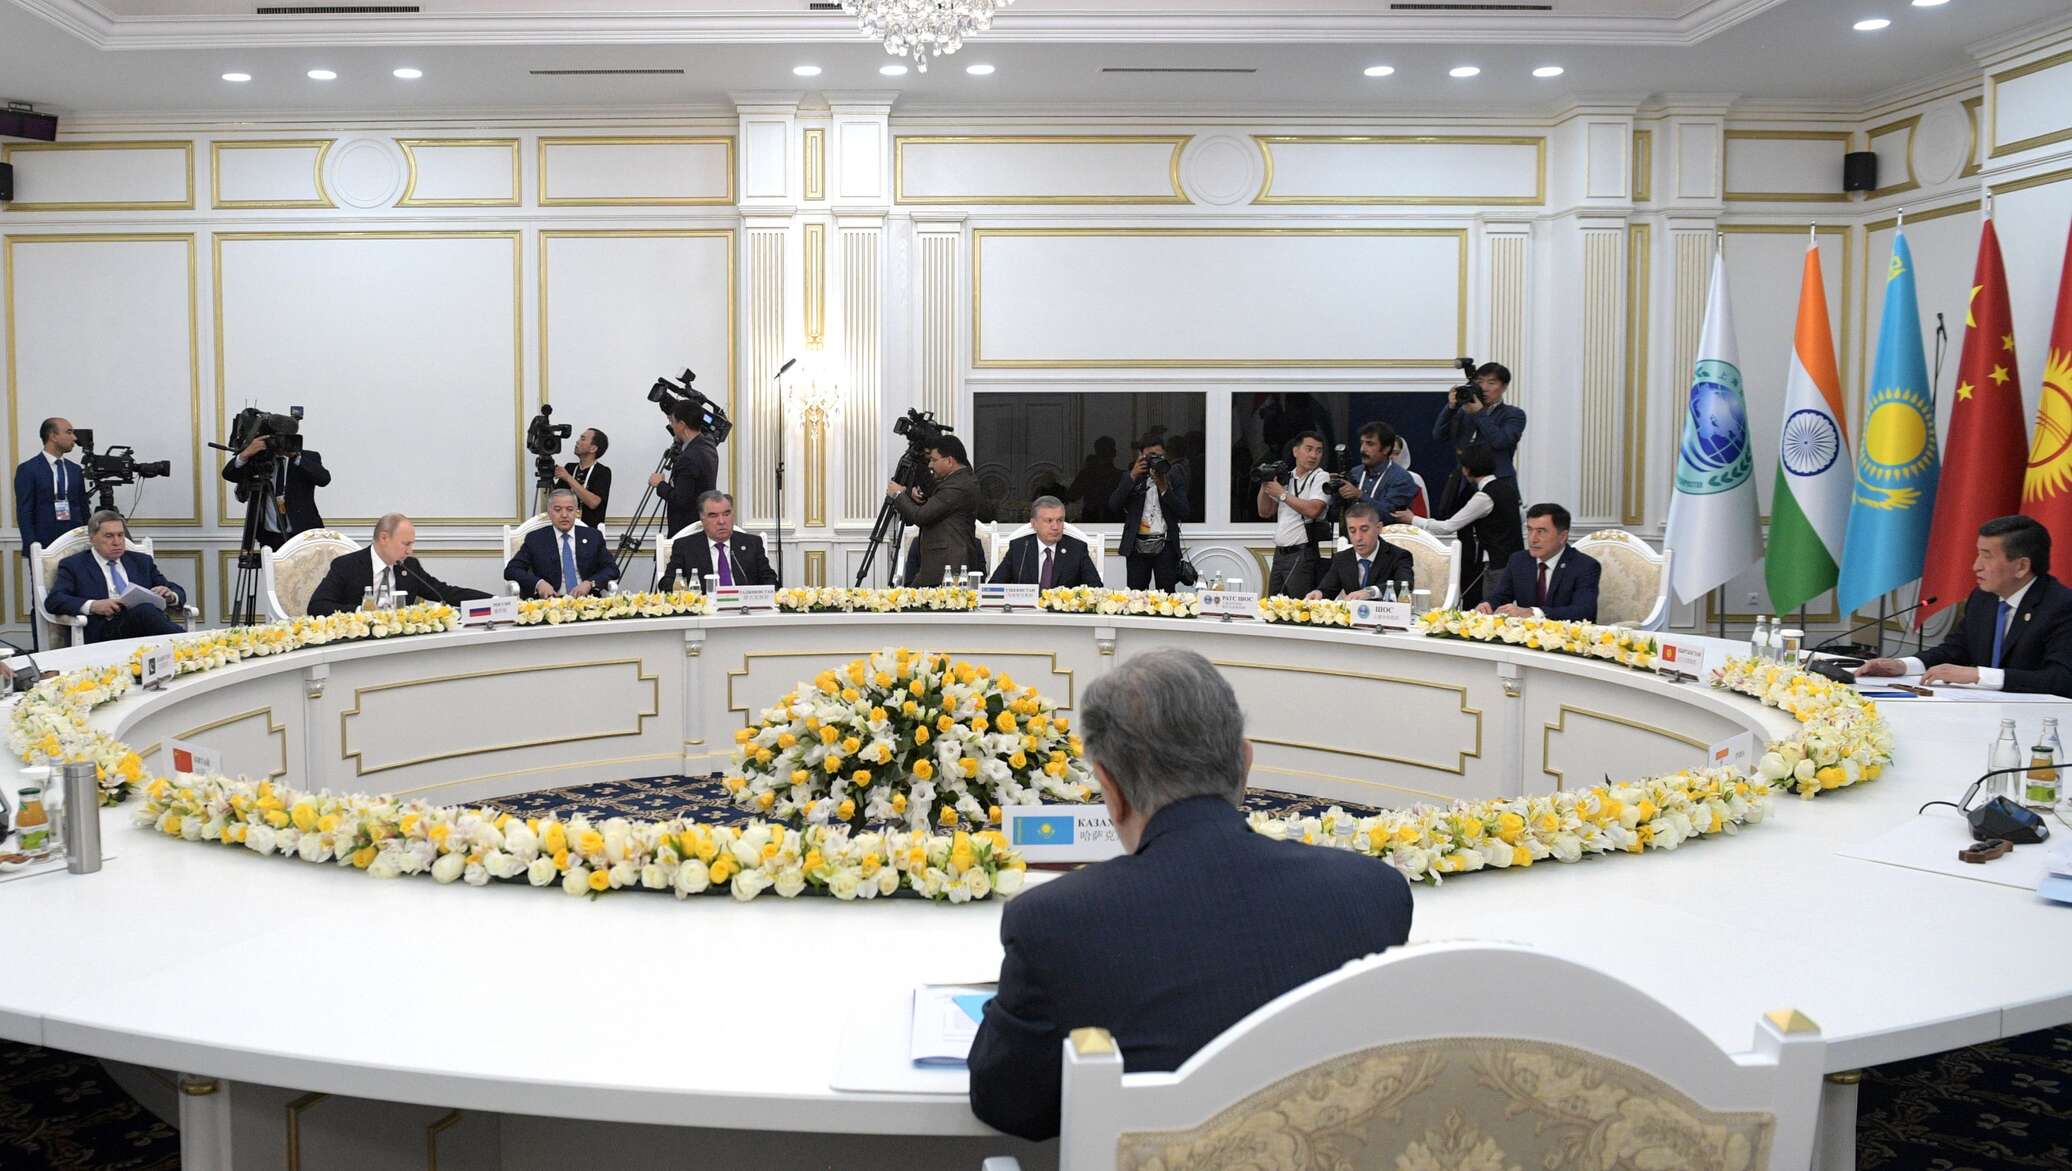 Саммит безопасности. Саммит по туризму Ташкент. Парламент Ирана одобрил законопроект о вступлении в ШОС.